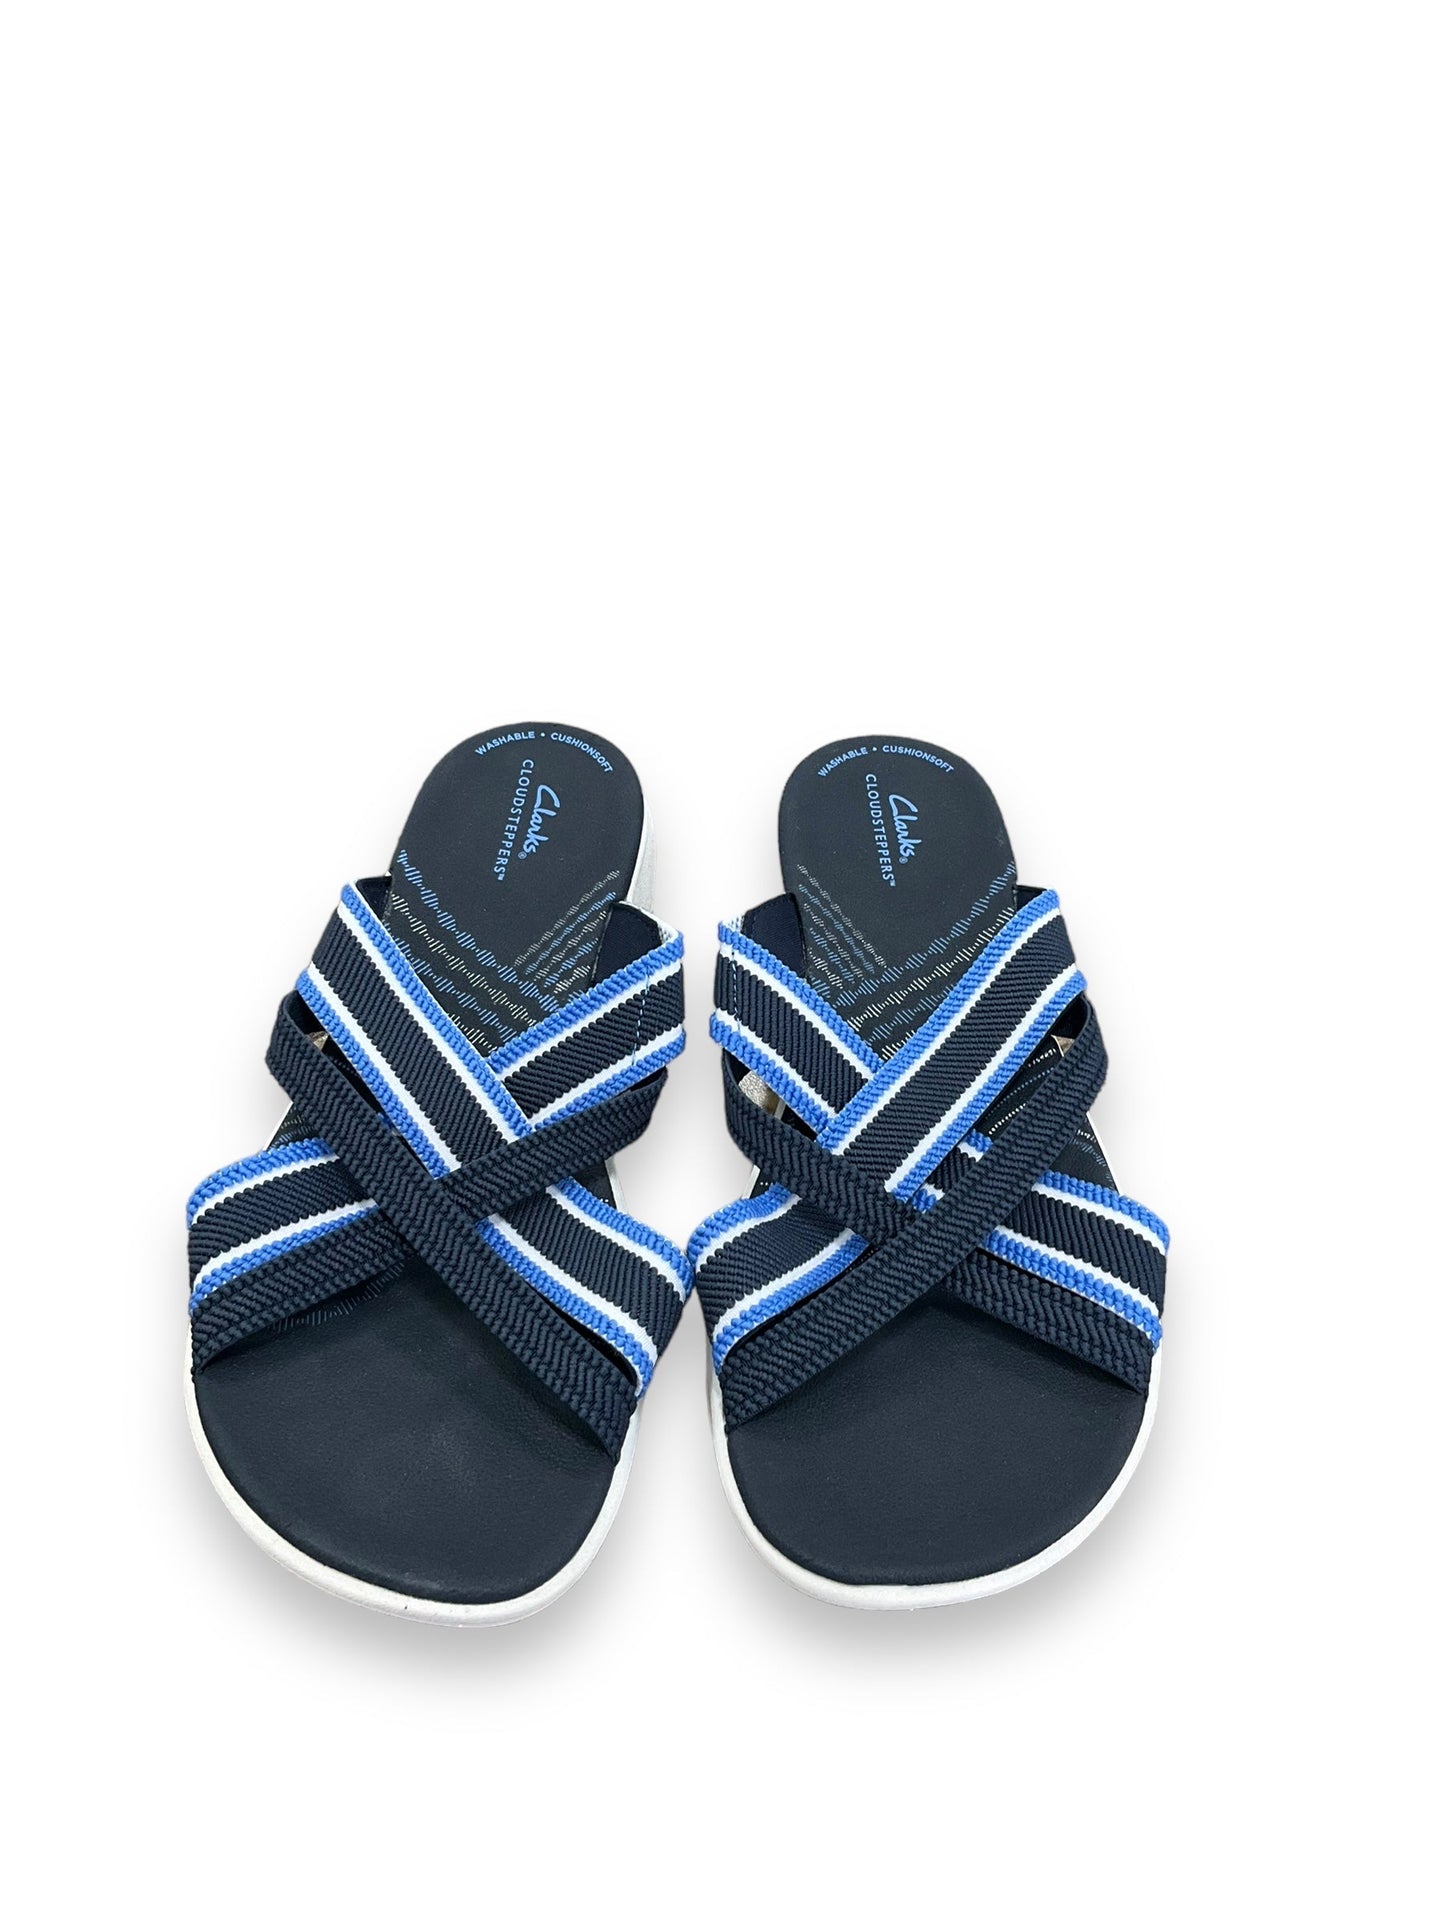 Nautical Print Sandals Flats Clarks, Size 8